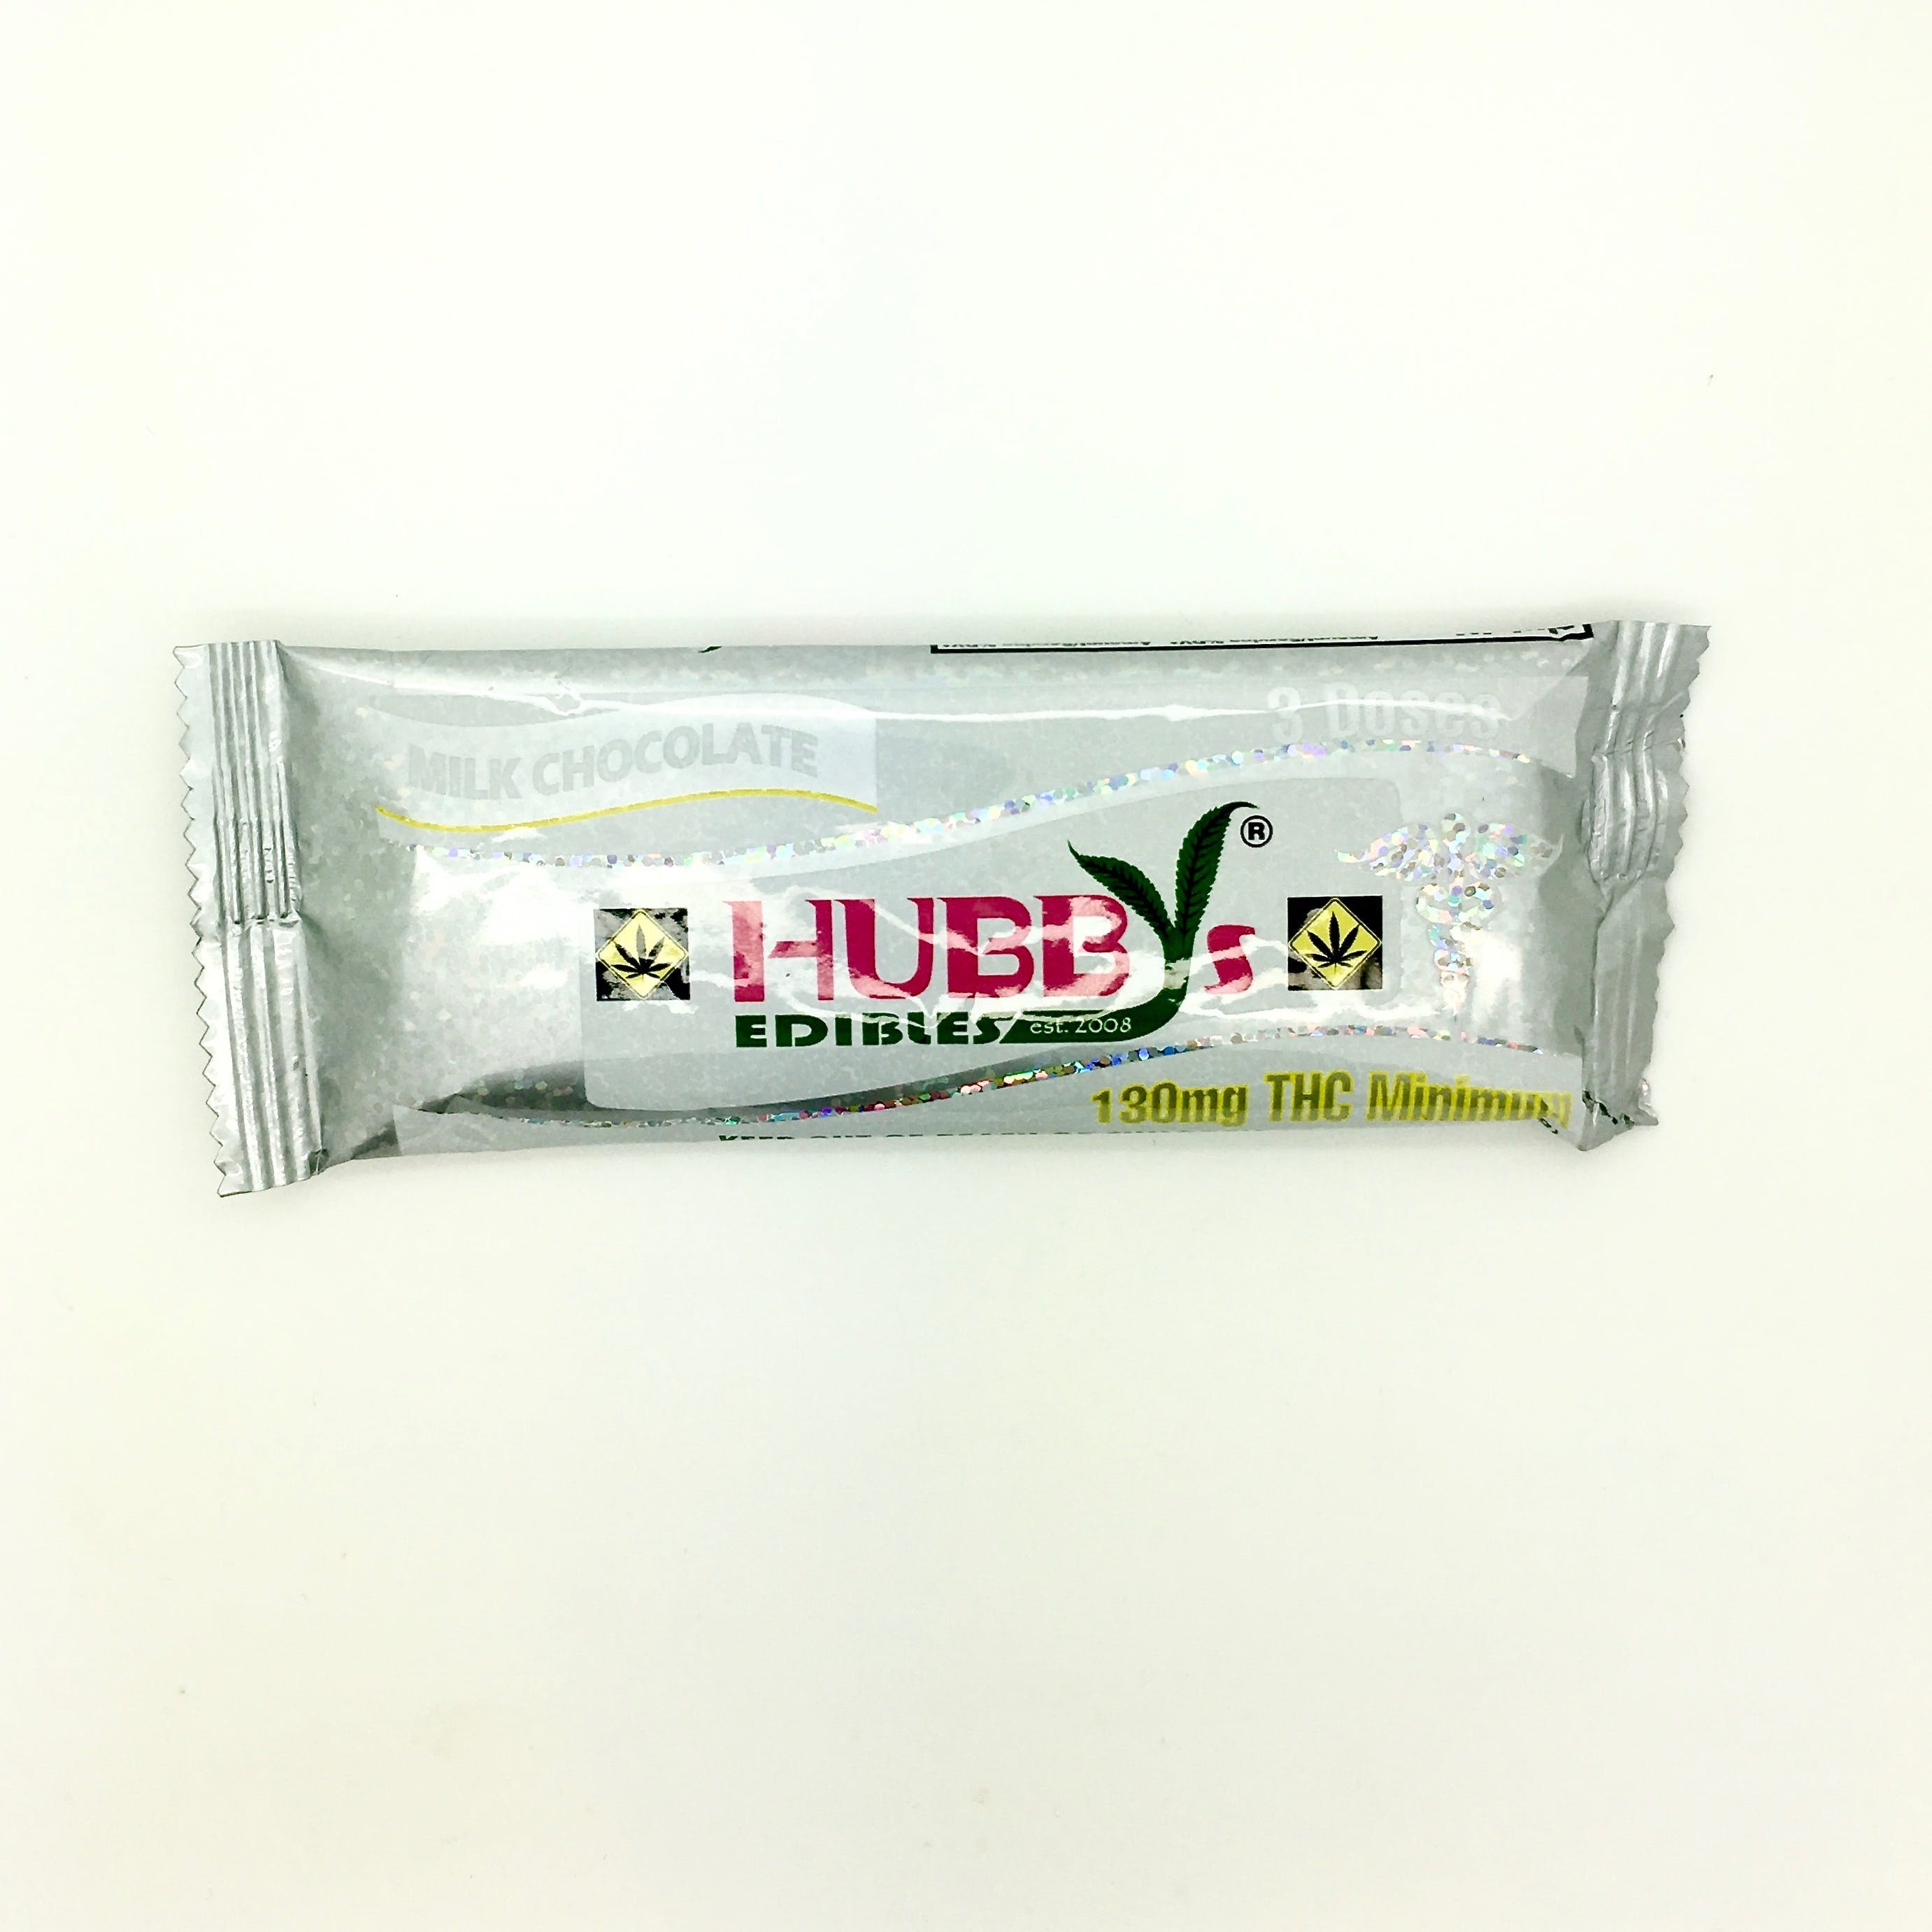 HUBBY'S EDIBLES - MILK CHOCOLATE - 130 MG